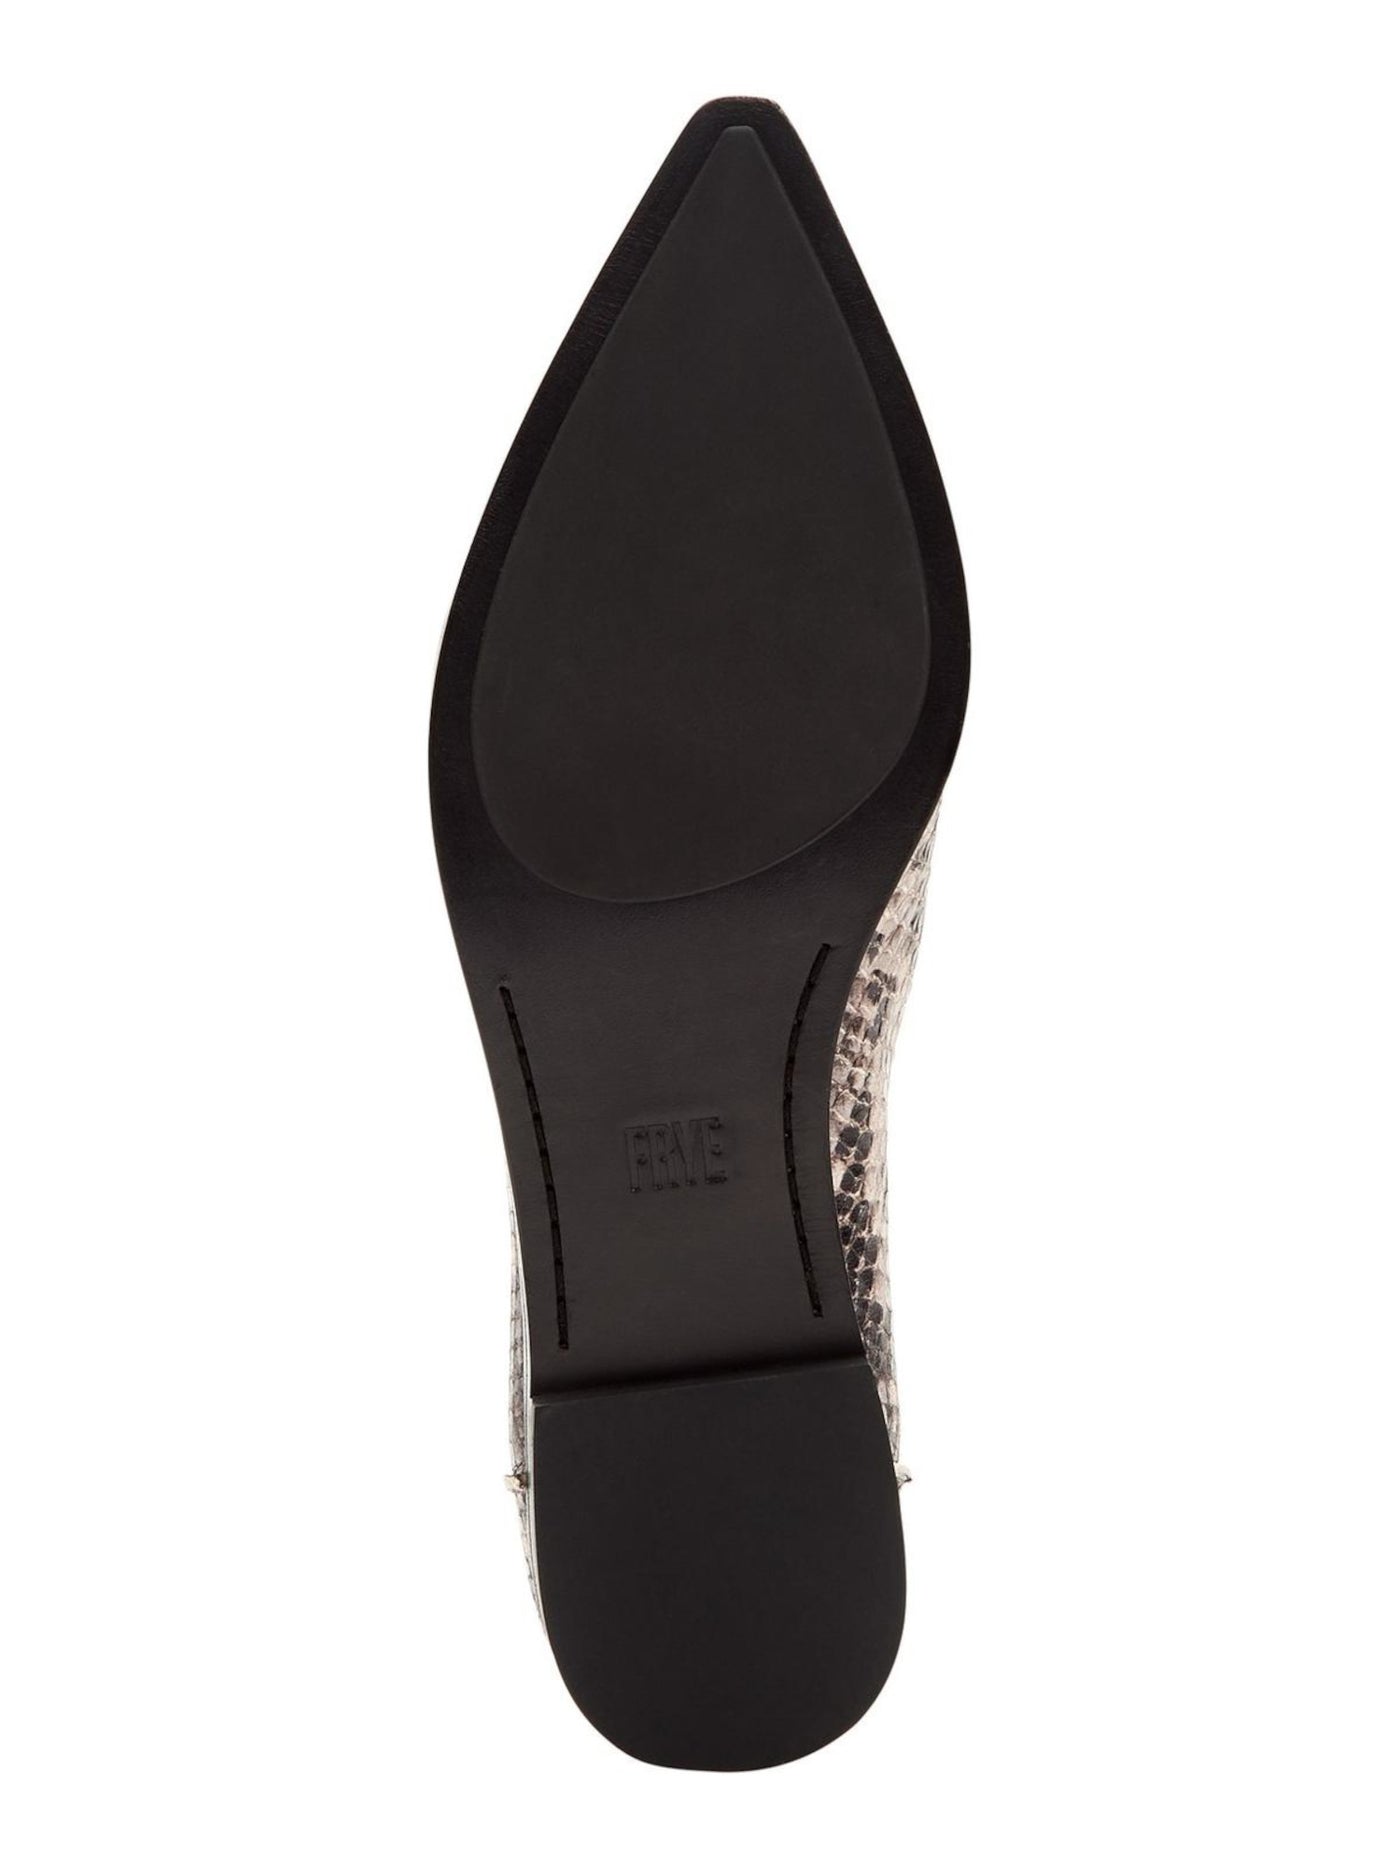 FRYE Womens Beige Snake Print Comfort Kenzie Pointed Toe Block Heel Slip On Leather Loafers Shoes M